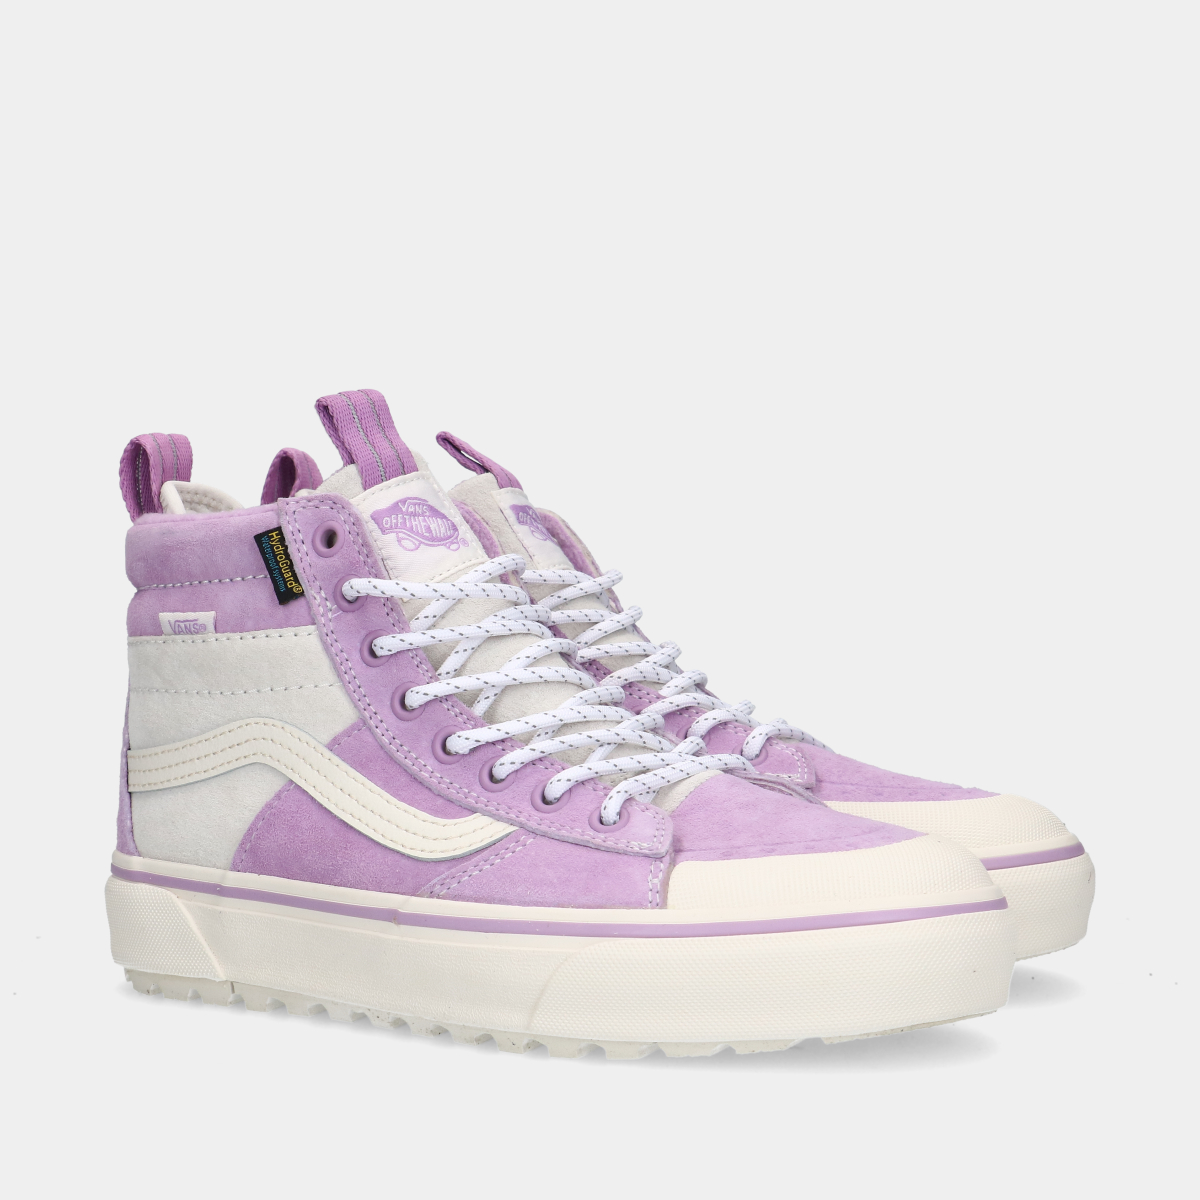 Vans Sk8-Hi Mte-2 Violet Ice/Marshmallow sneakers